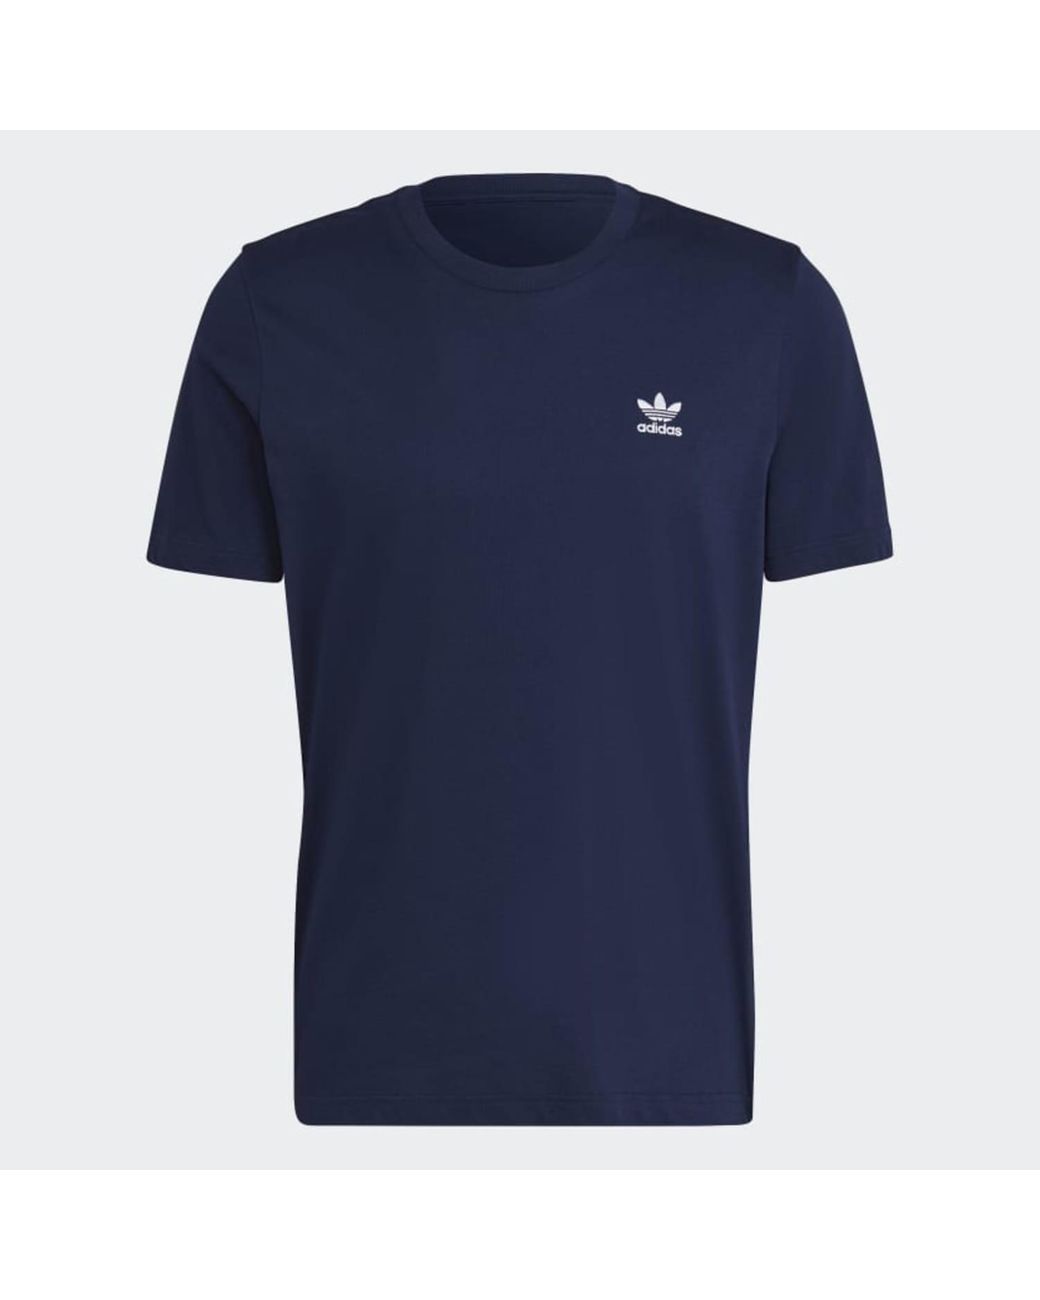 adidas Cotton Essentials T-shirt in Navy (Blue) for Men - Save 25% | Lyst